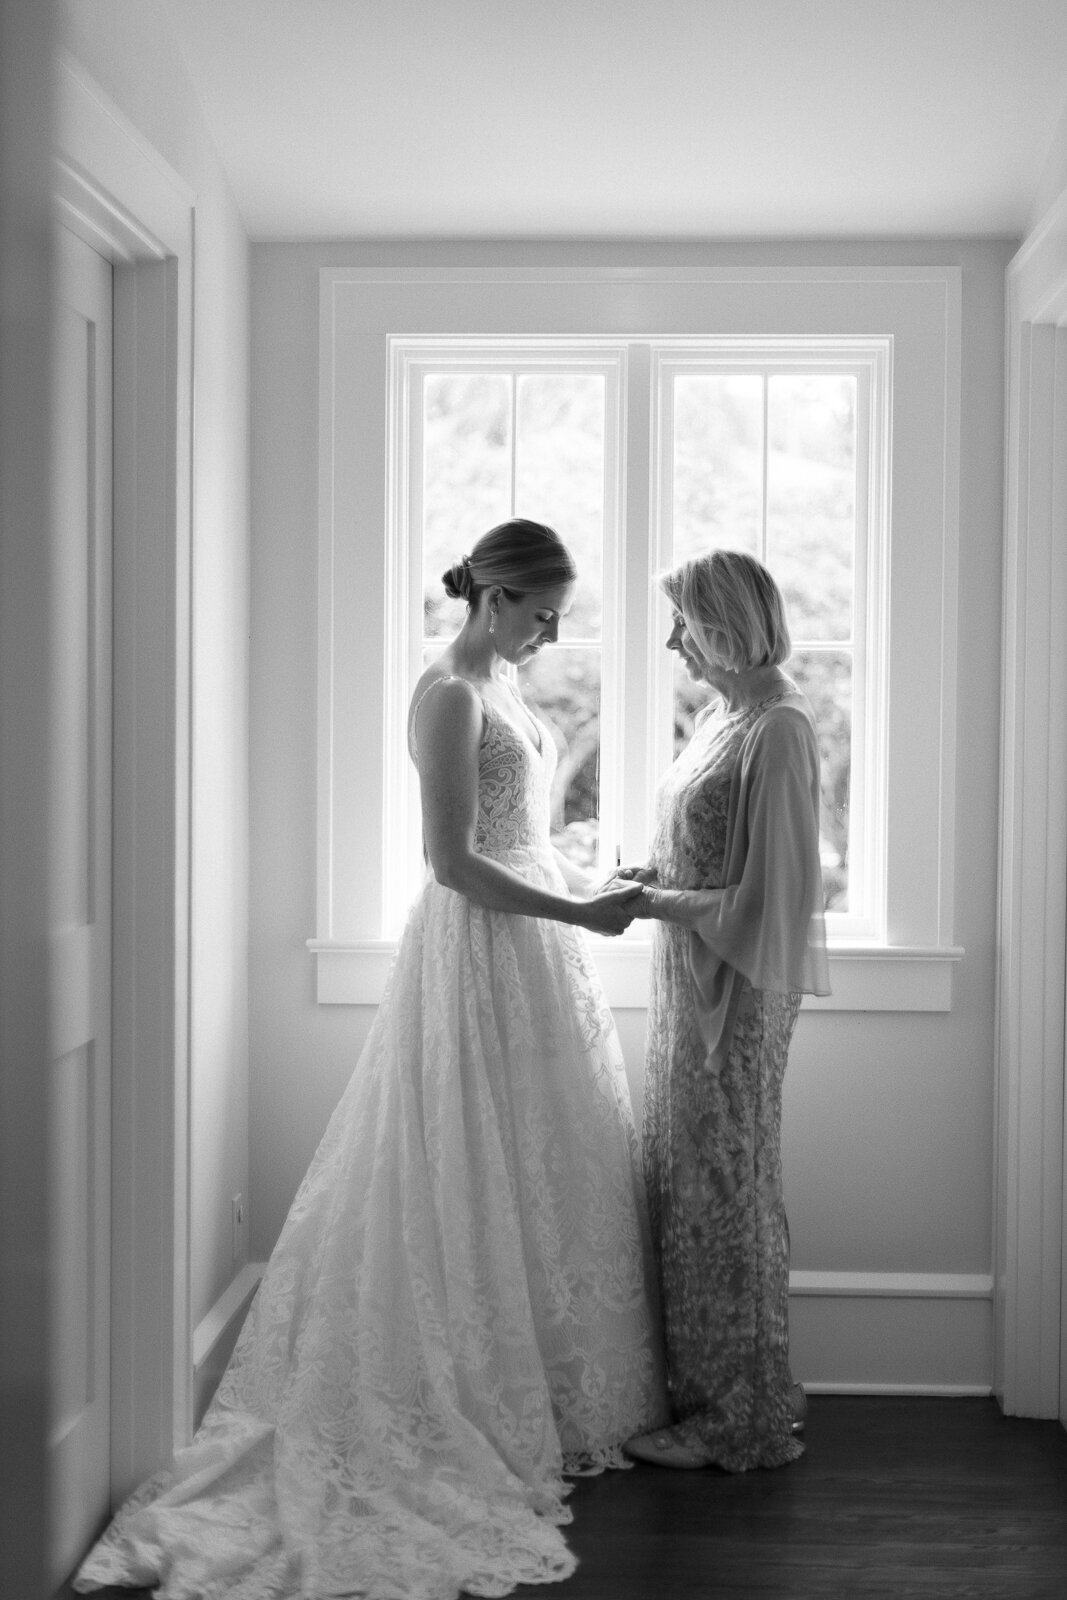 Beautiful window light before wedding ceremony, captured by Orlando Wedding Photographer